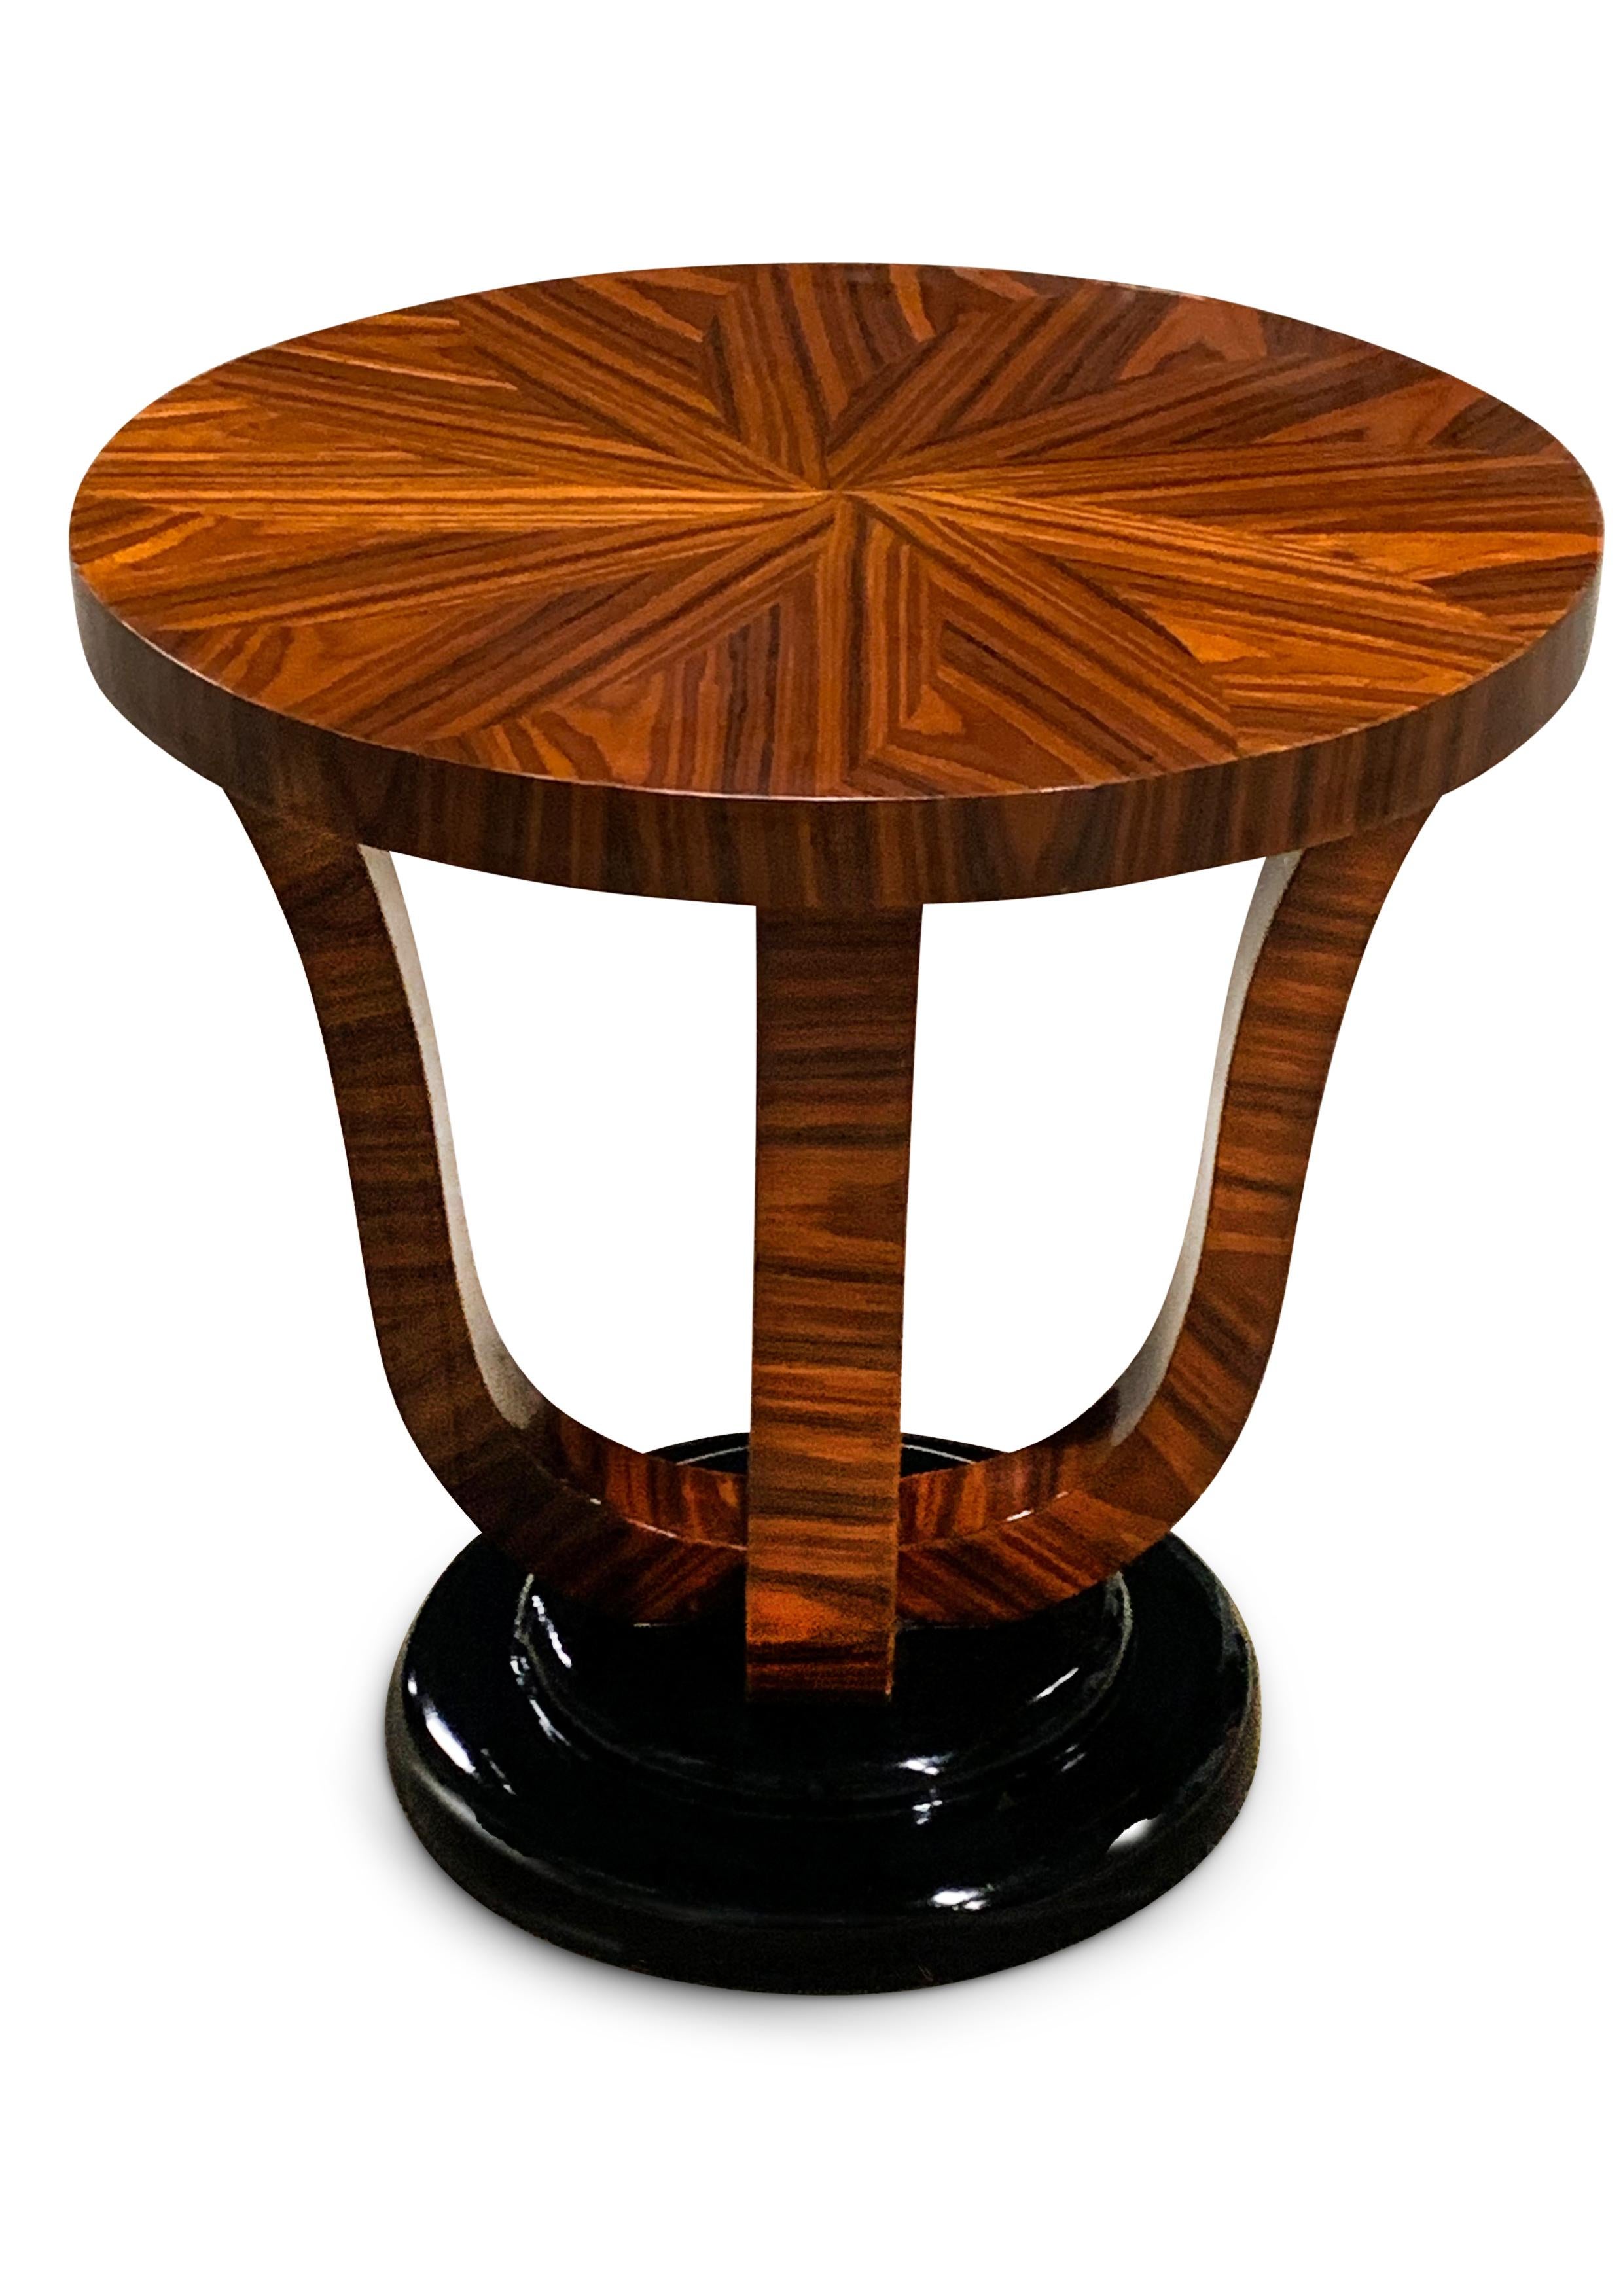 Jules Leleu Style Art Deco Pedestal Table With A Beautiful Rosewood Sunburst Top For Sale 1